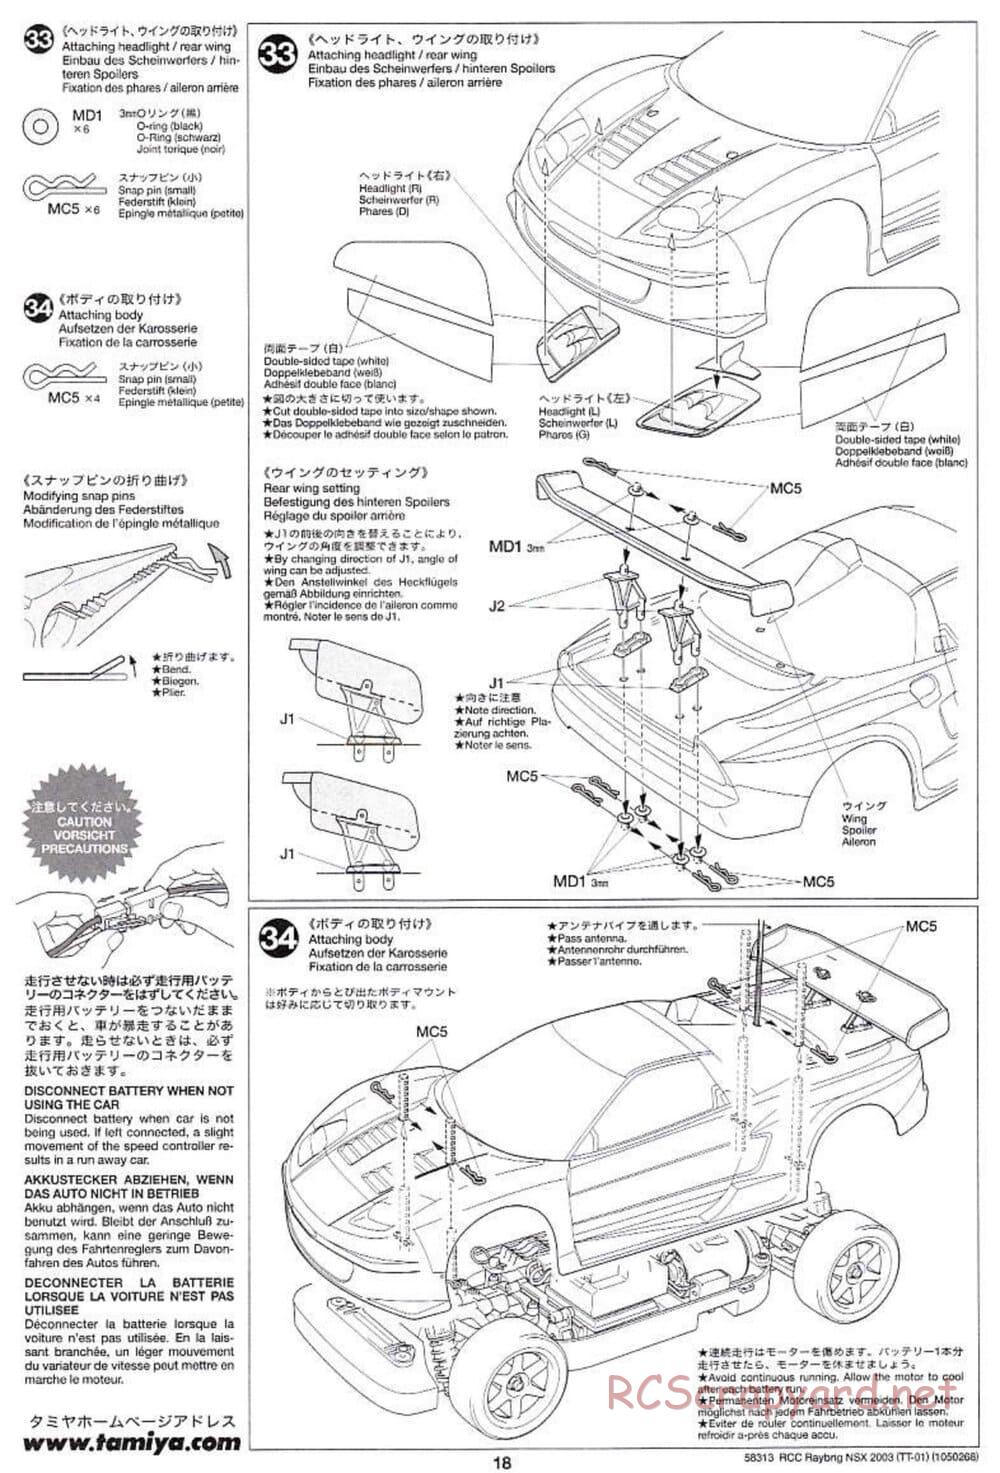 Tamiya - Raybrig NSX 2003 - TT-01 Chassis - Manual - Page 18